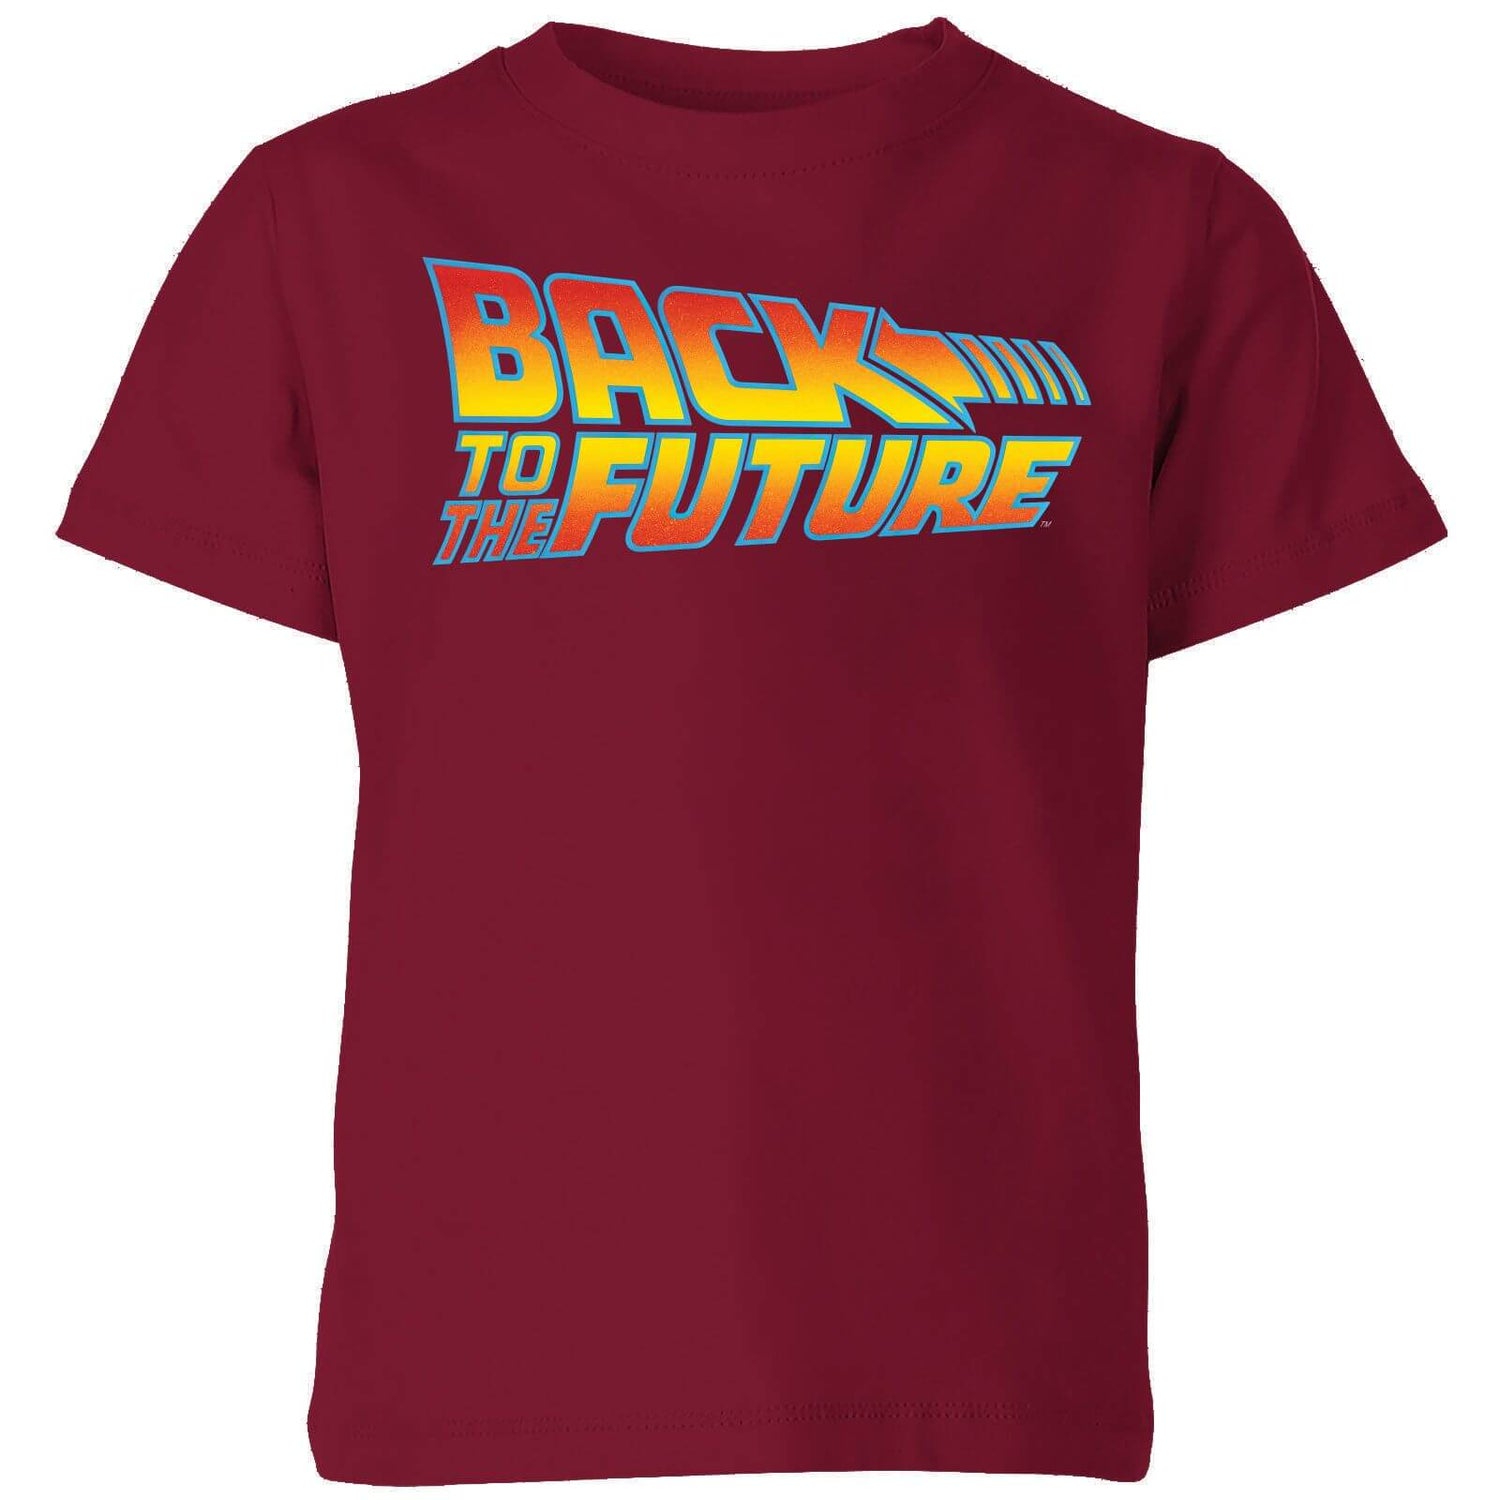 Back To The Future Classic Logo Kids' T-Shirt - Burgundy